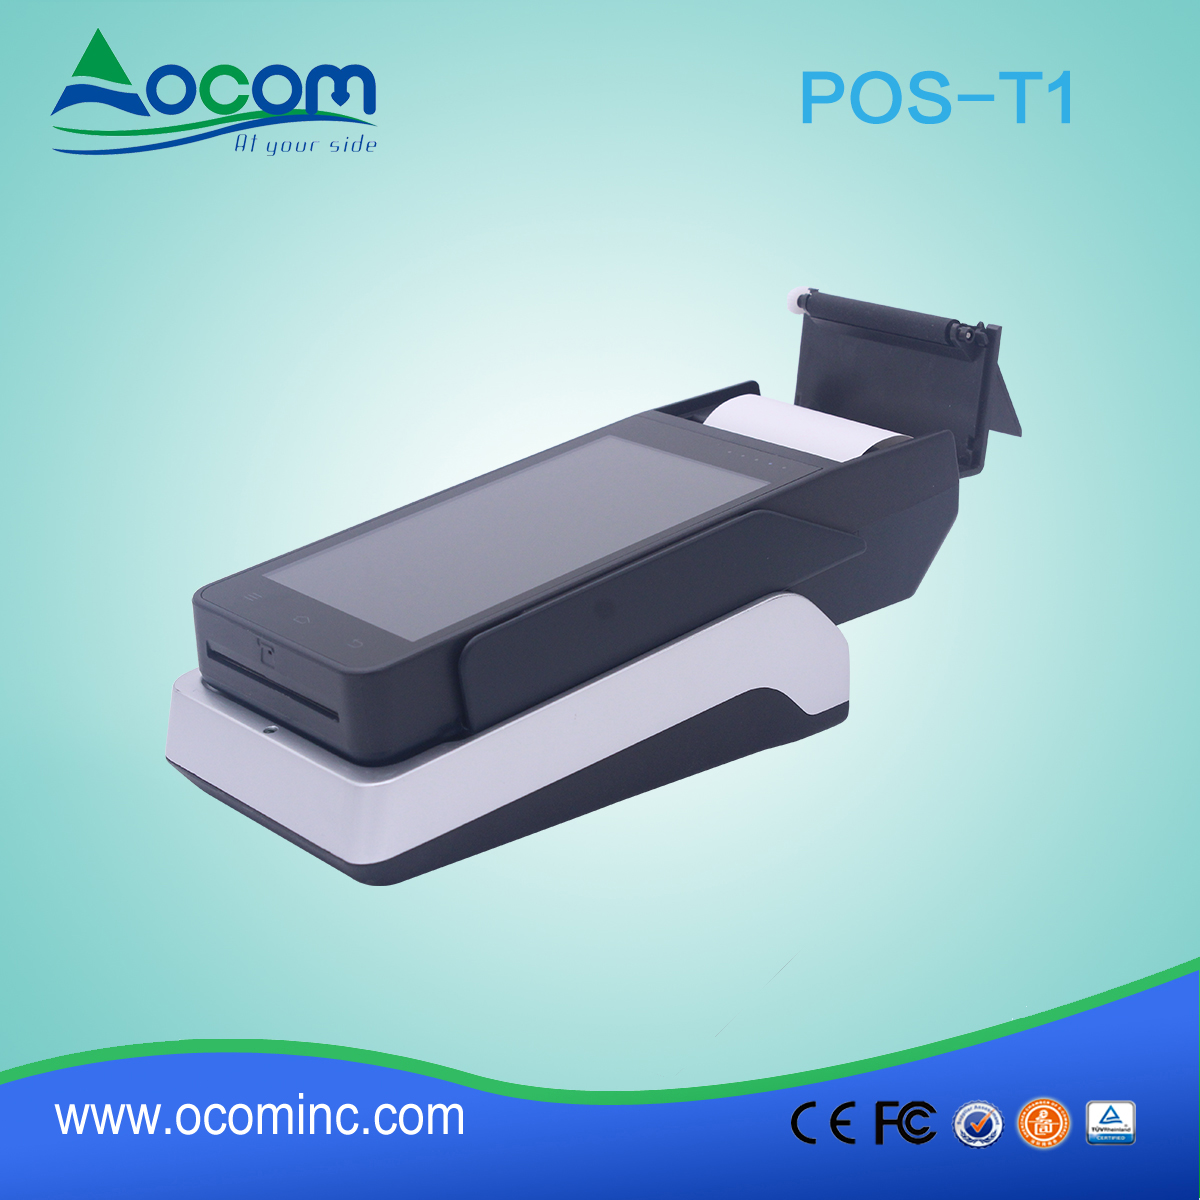 (POS-T1)    中国工厂坚固耐用的手持式 pos 终端带58mm 热敏打印机 有emv认证